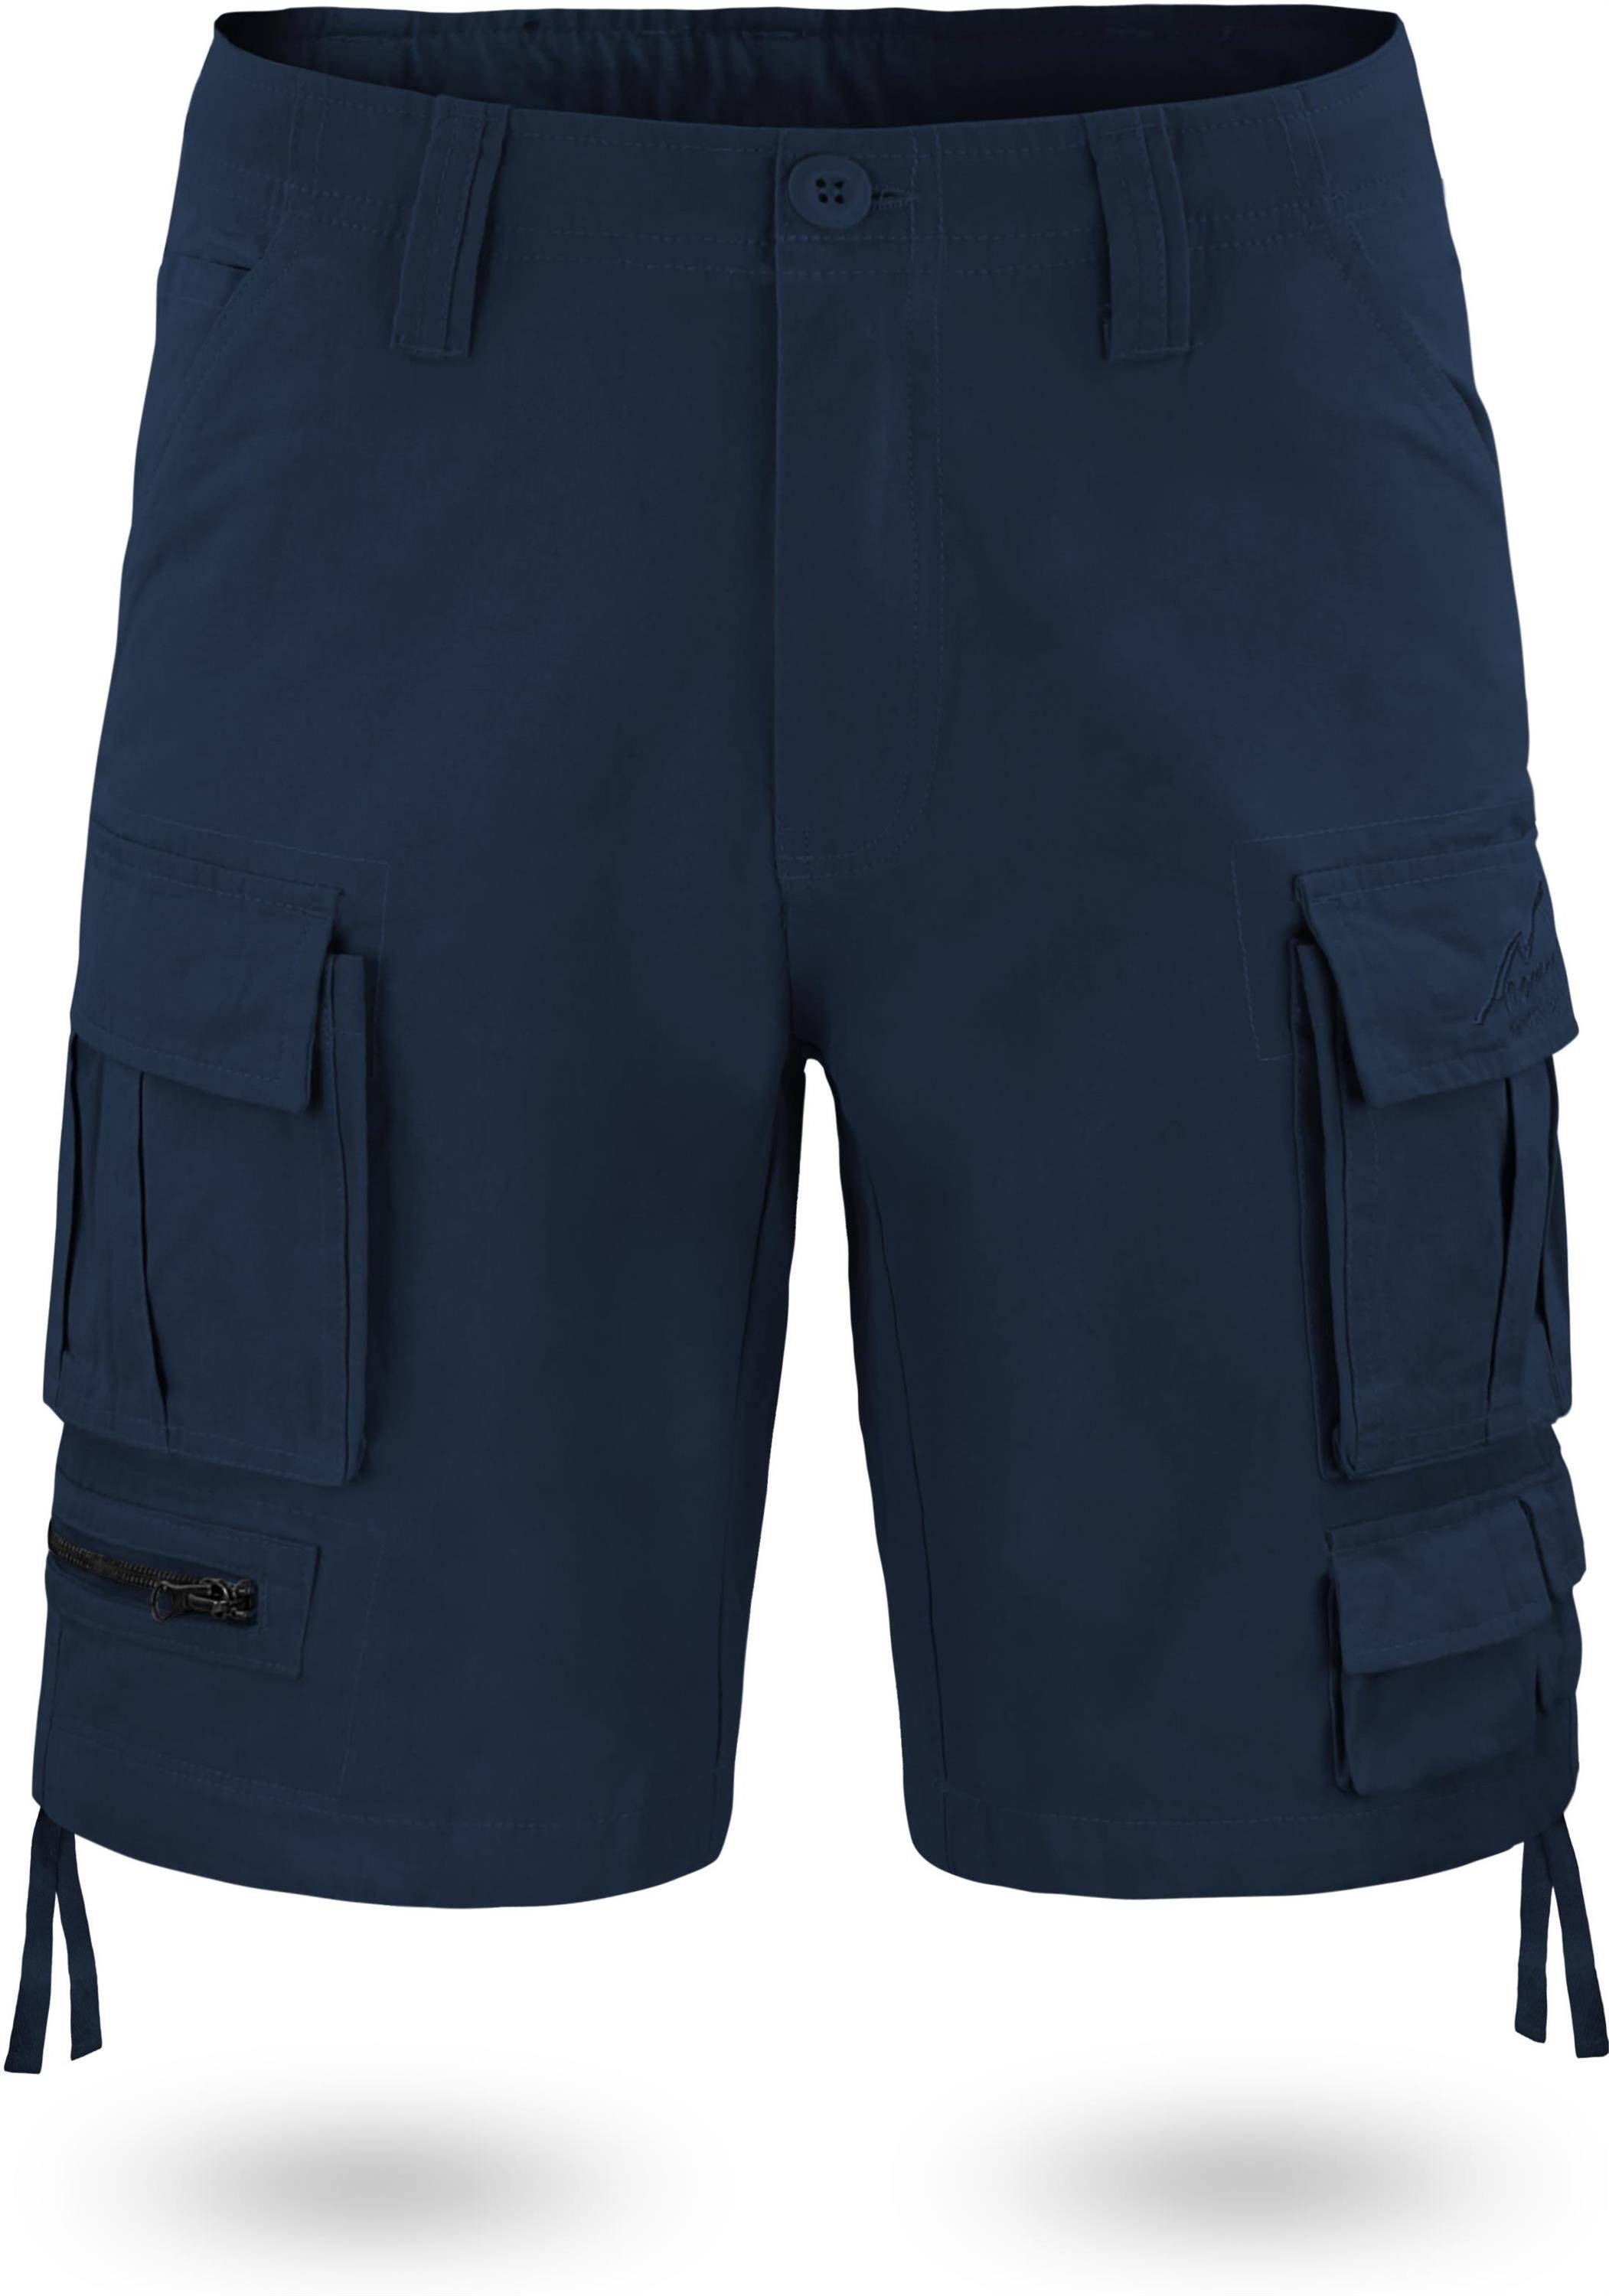 normani Bermudas Herren Shorts Atacama Vintage Shorts kurze Sommershorts Cargoshorts aus 100% Bio-Baumwolle Navy | Bermudas